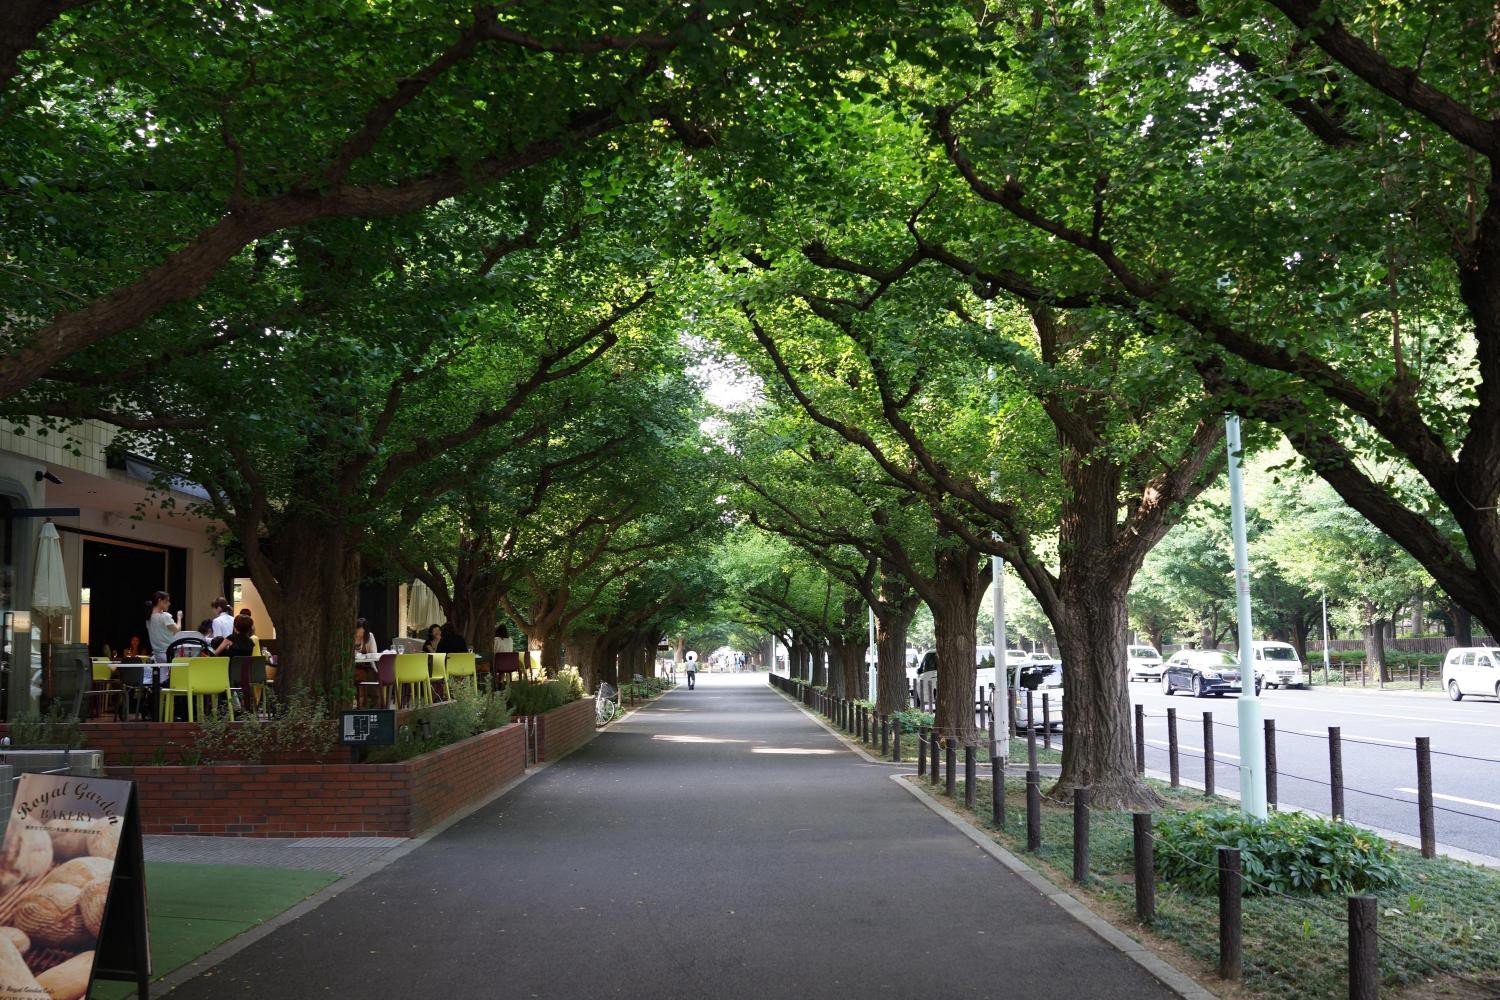 Street trees. Meiji Jingu Park. Улица с деревьями. Городская улица с деревьями. Деревья в городе.